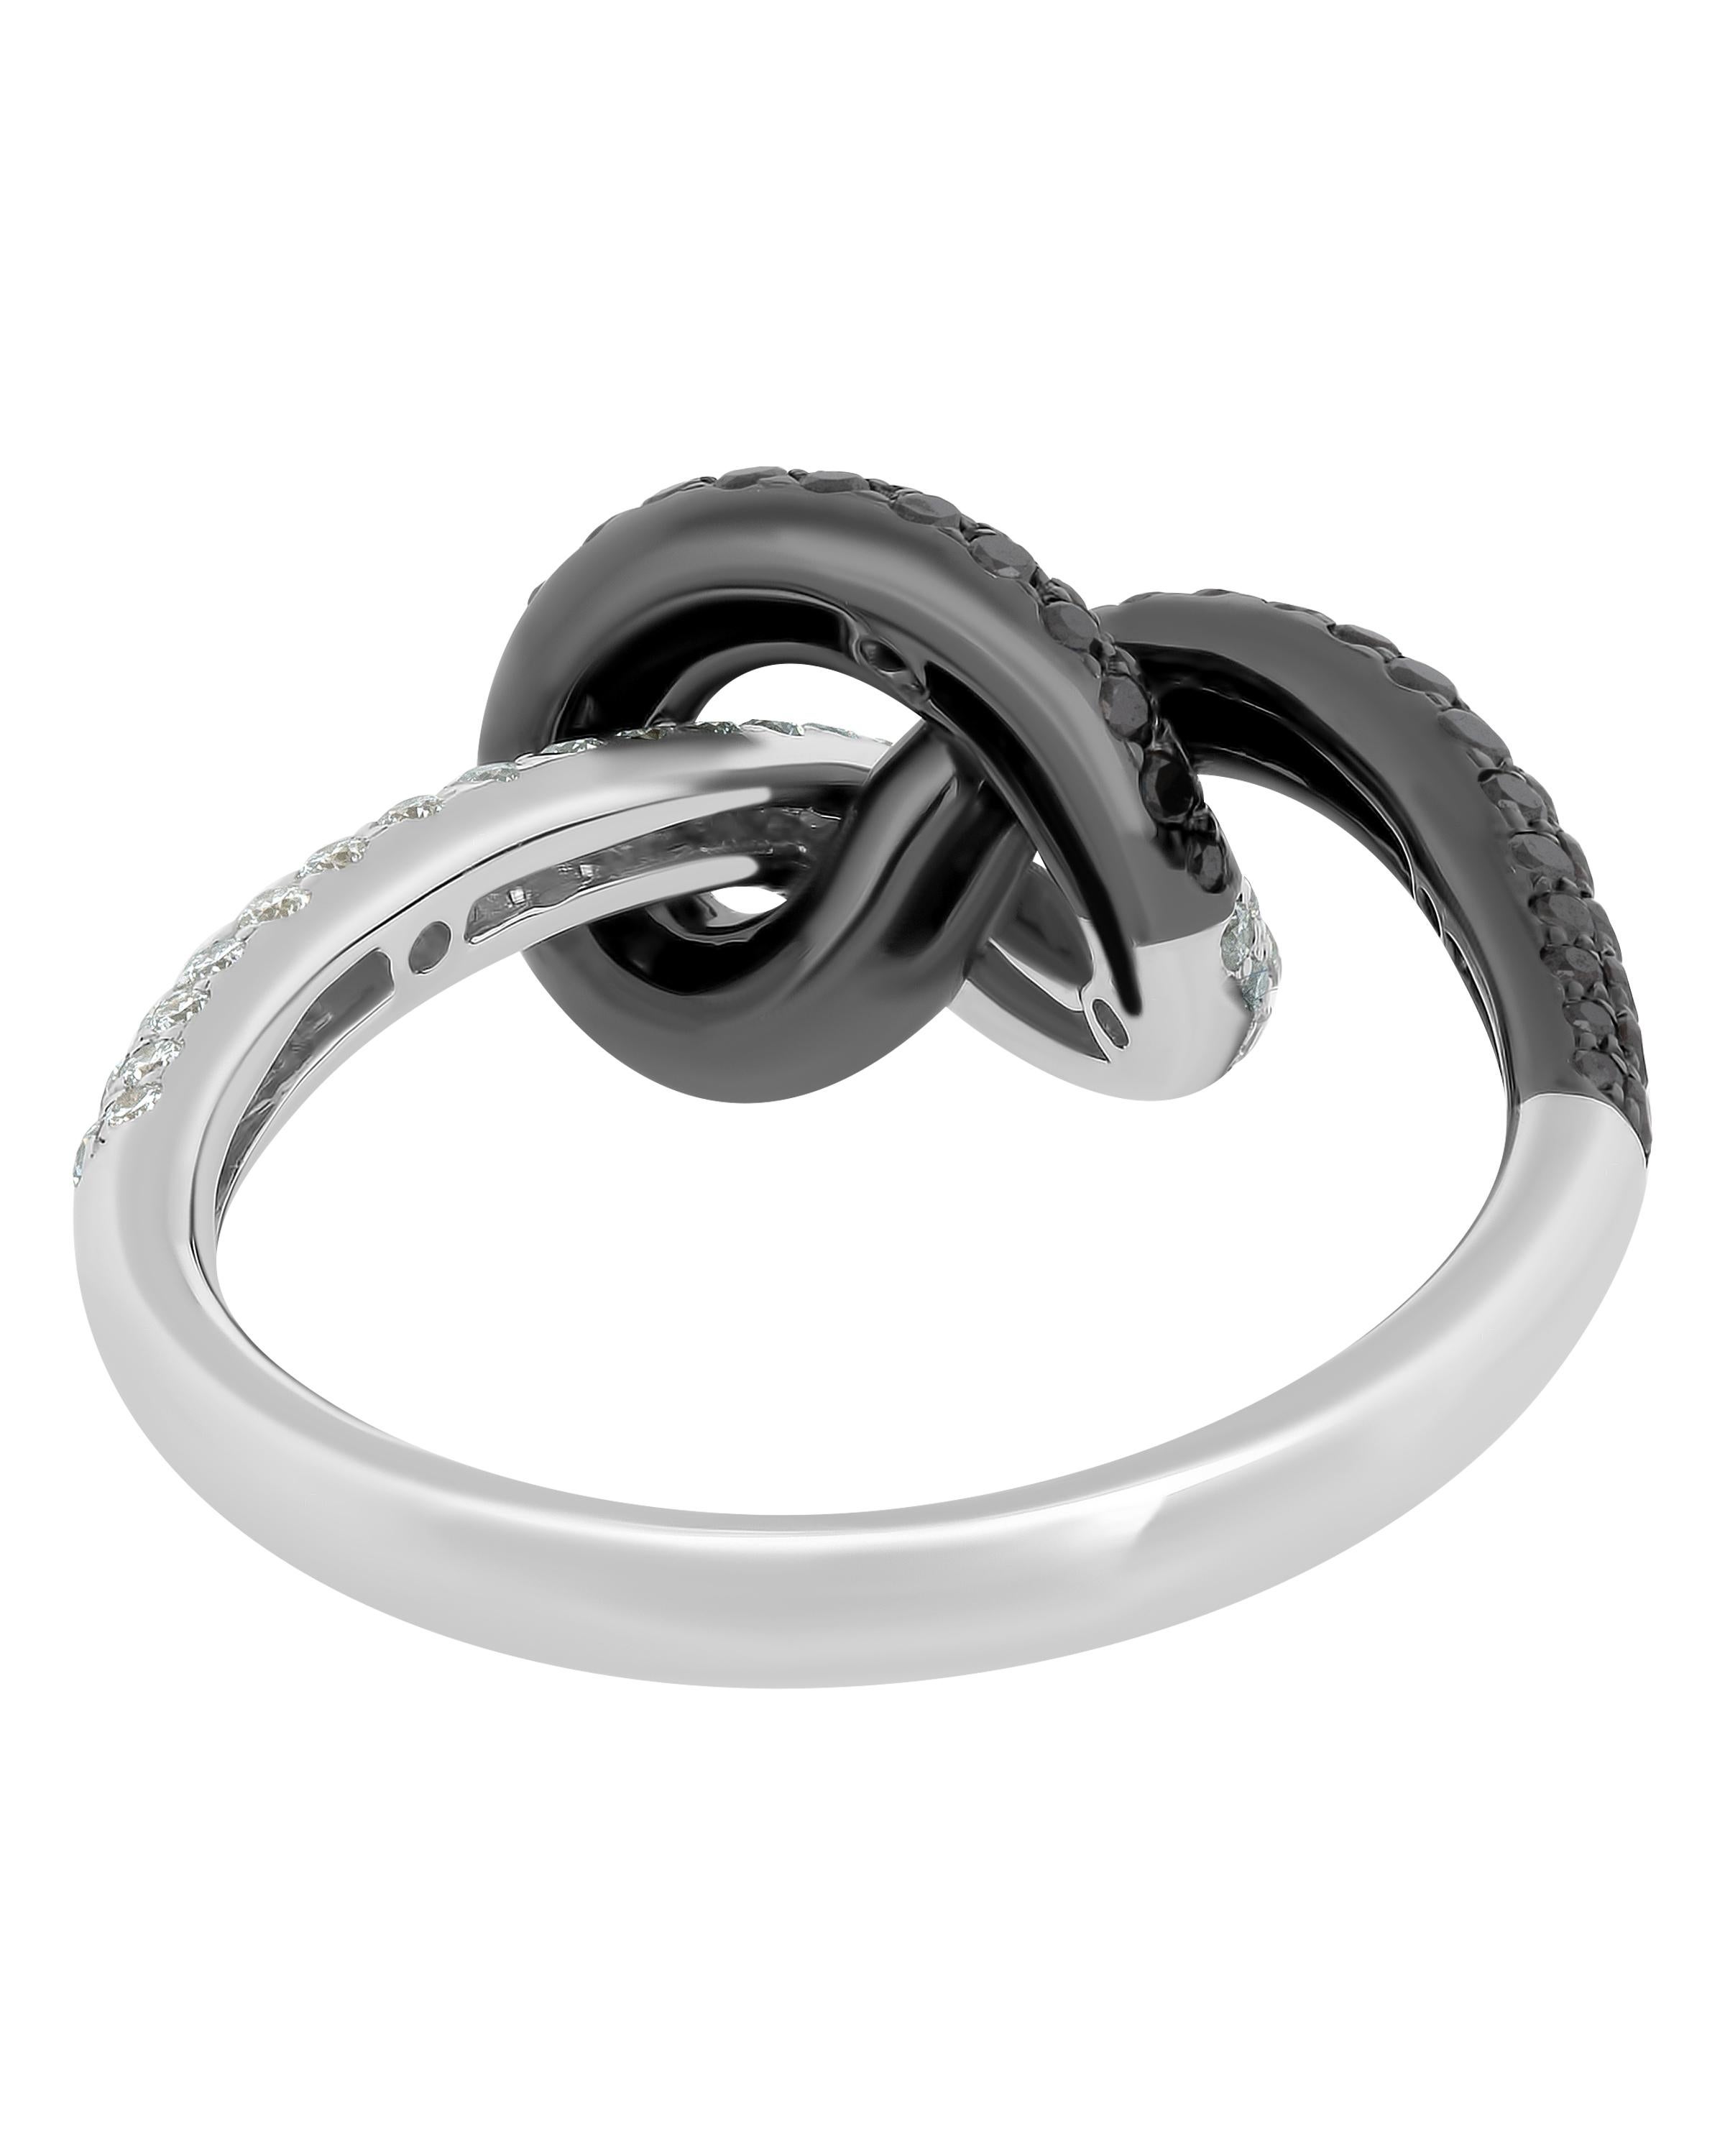 Contemporary Piero Milano 18K White and Black Gold, Diamond Ring Sz 7 For Sale